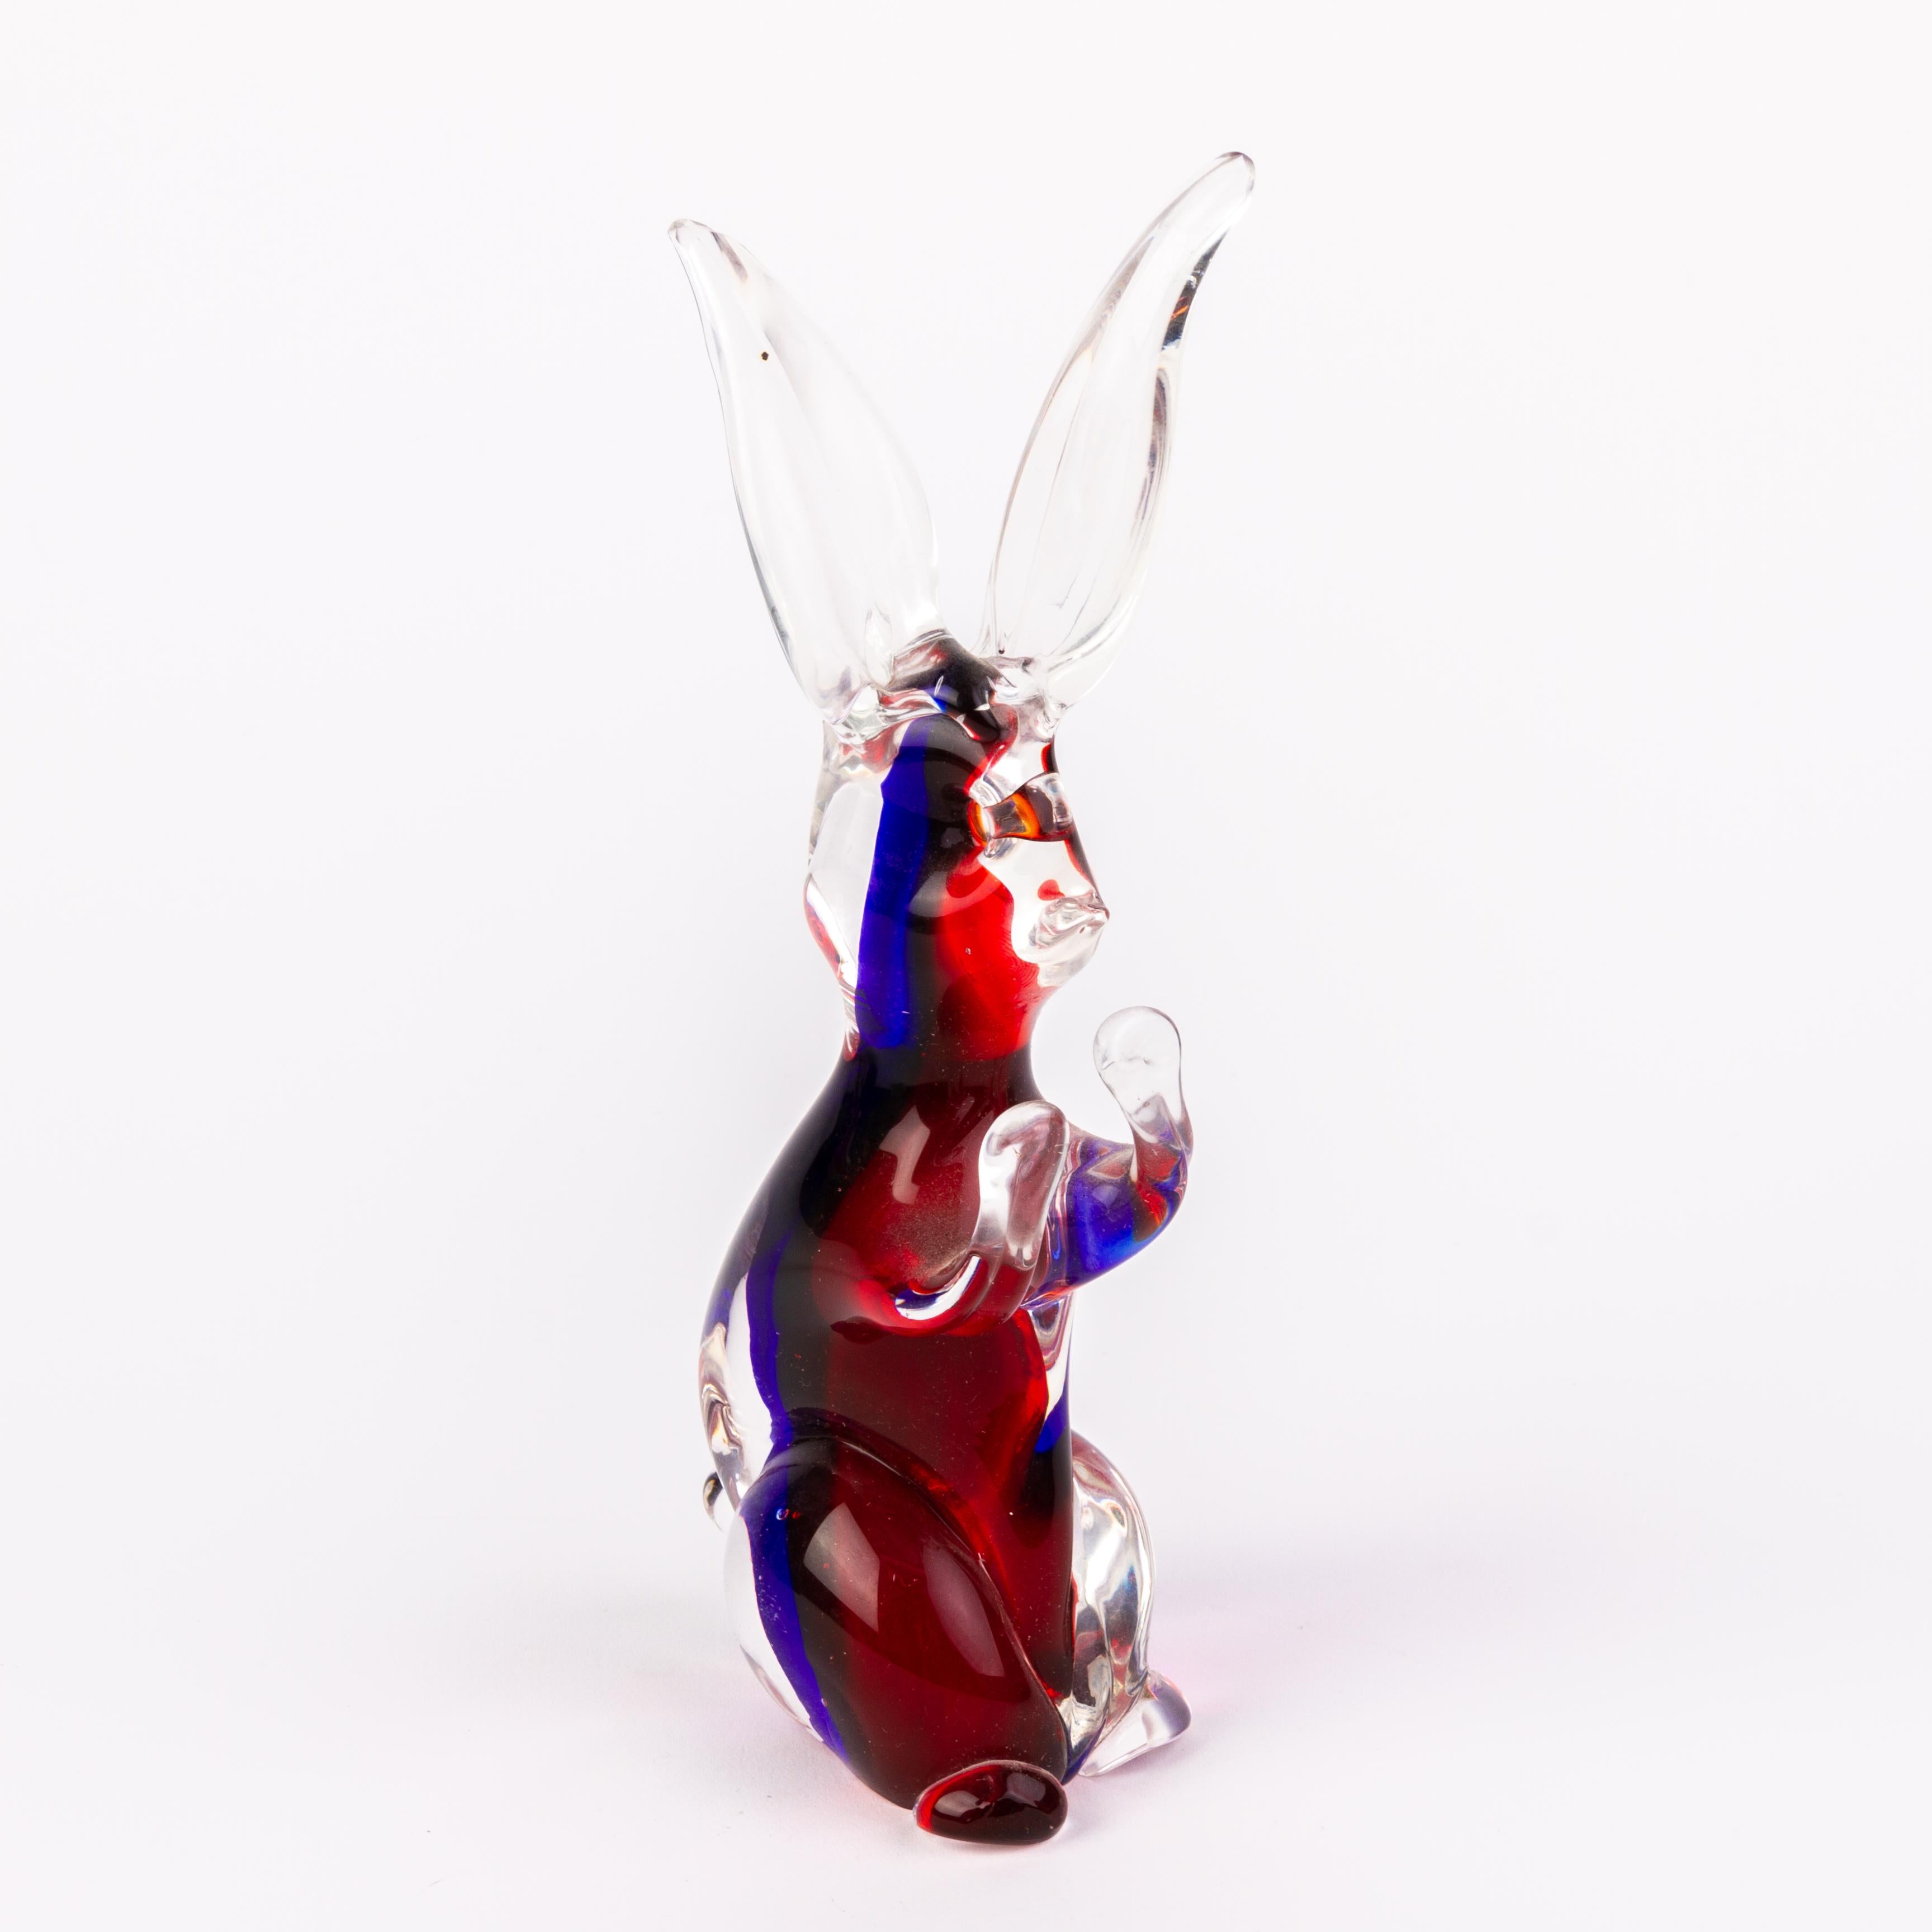 Murano Venetian Glass Sculpture Rabbit
Good condition
Free international shipping.